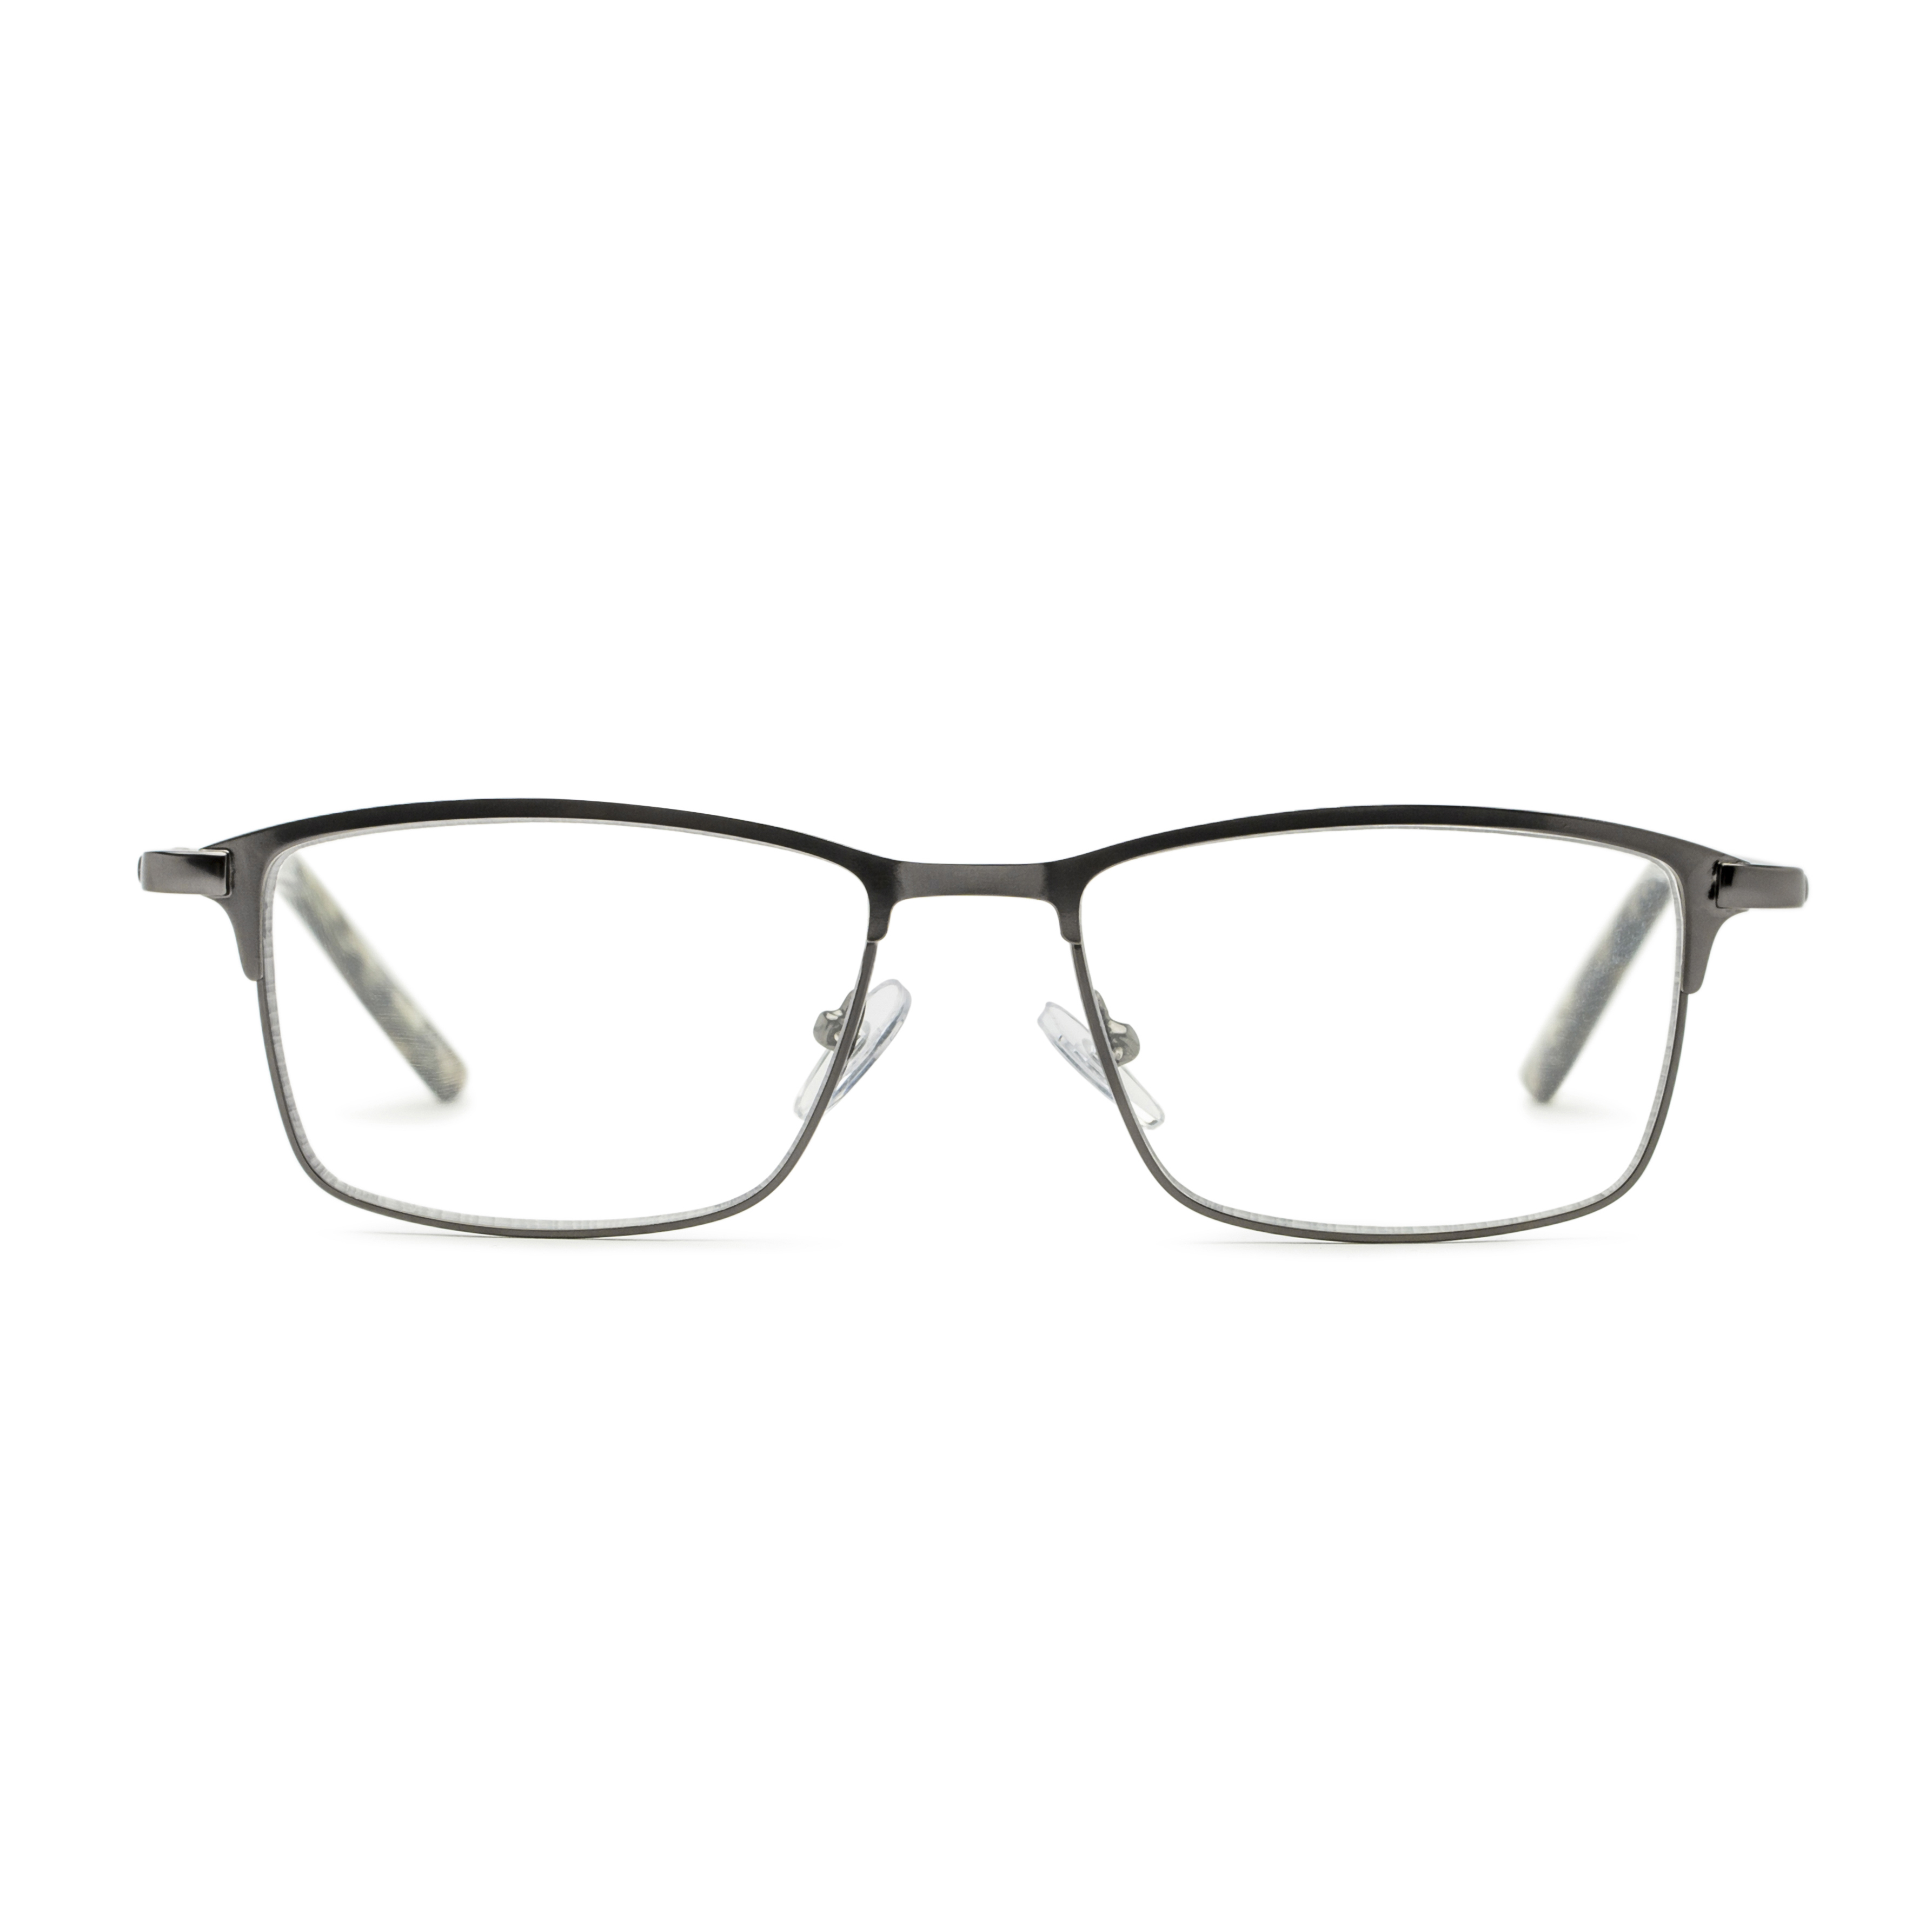 Men's Rectangle Blue Light Glasses In Gunmetal By Foster Grant - Austin Pop Of Power® Bifocal Style Readers - +2.00